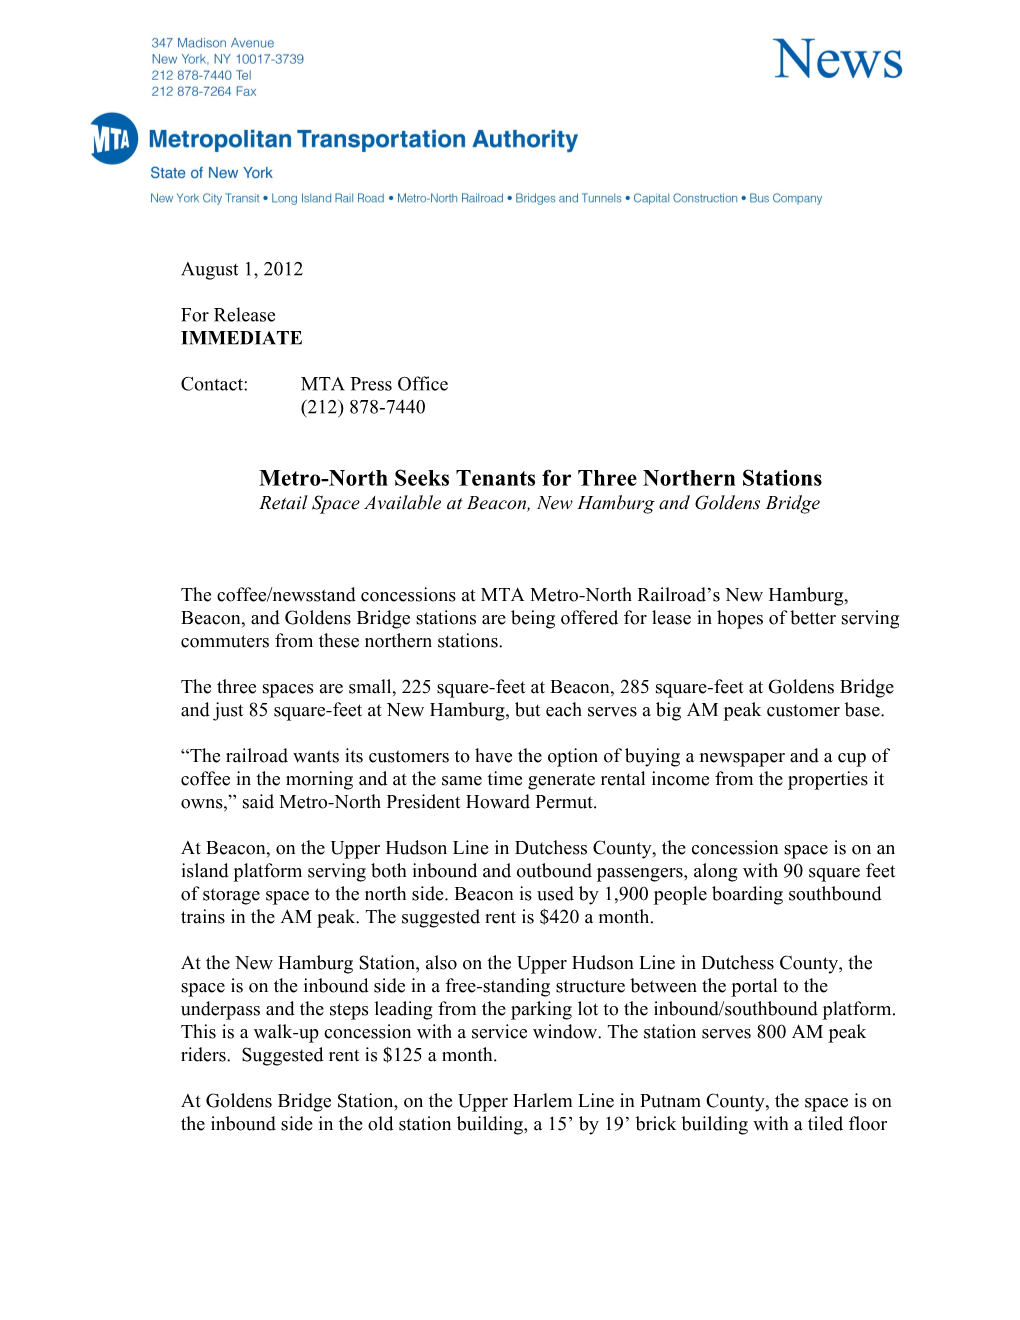 Metro-North Seeks Tenants for Three Northern Stations